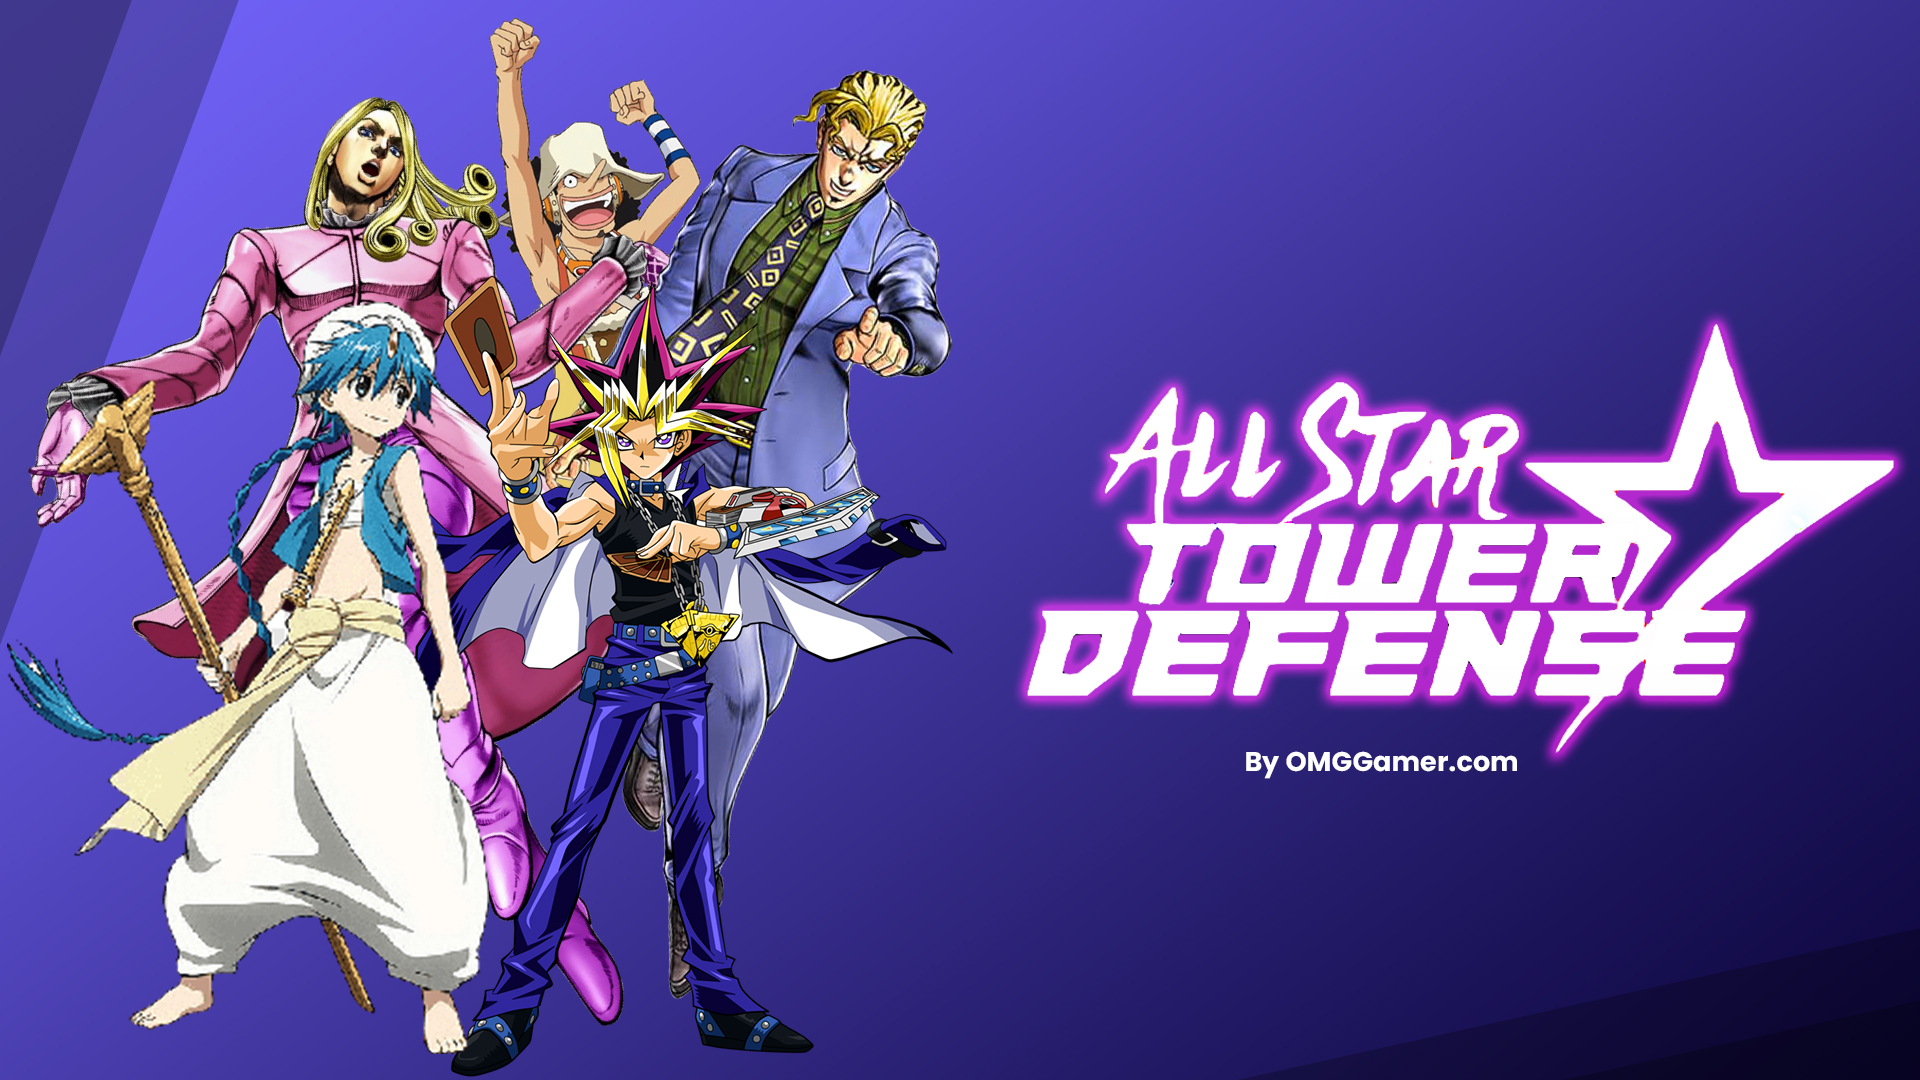 ASTD Tier List - Best All Star Tower Defense 